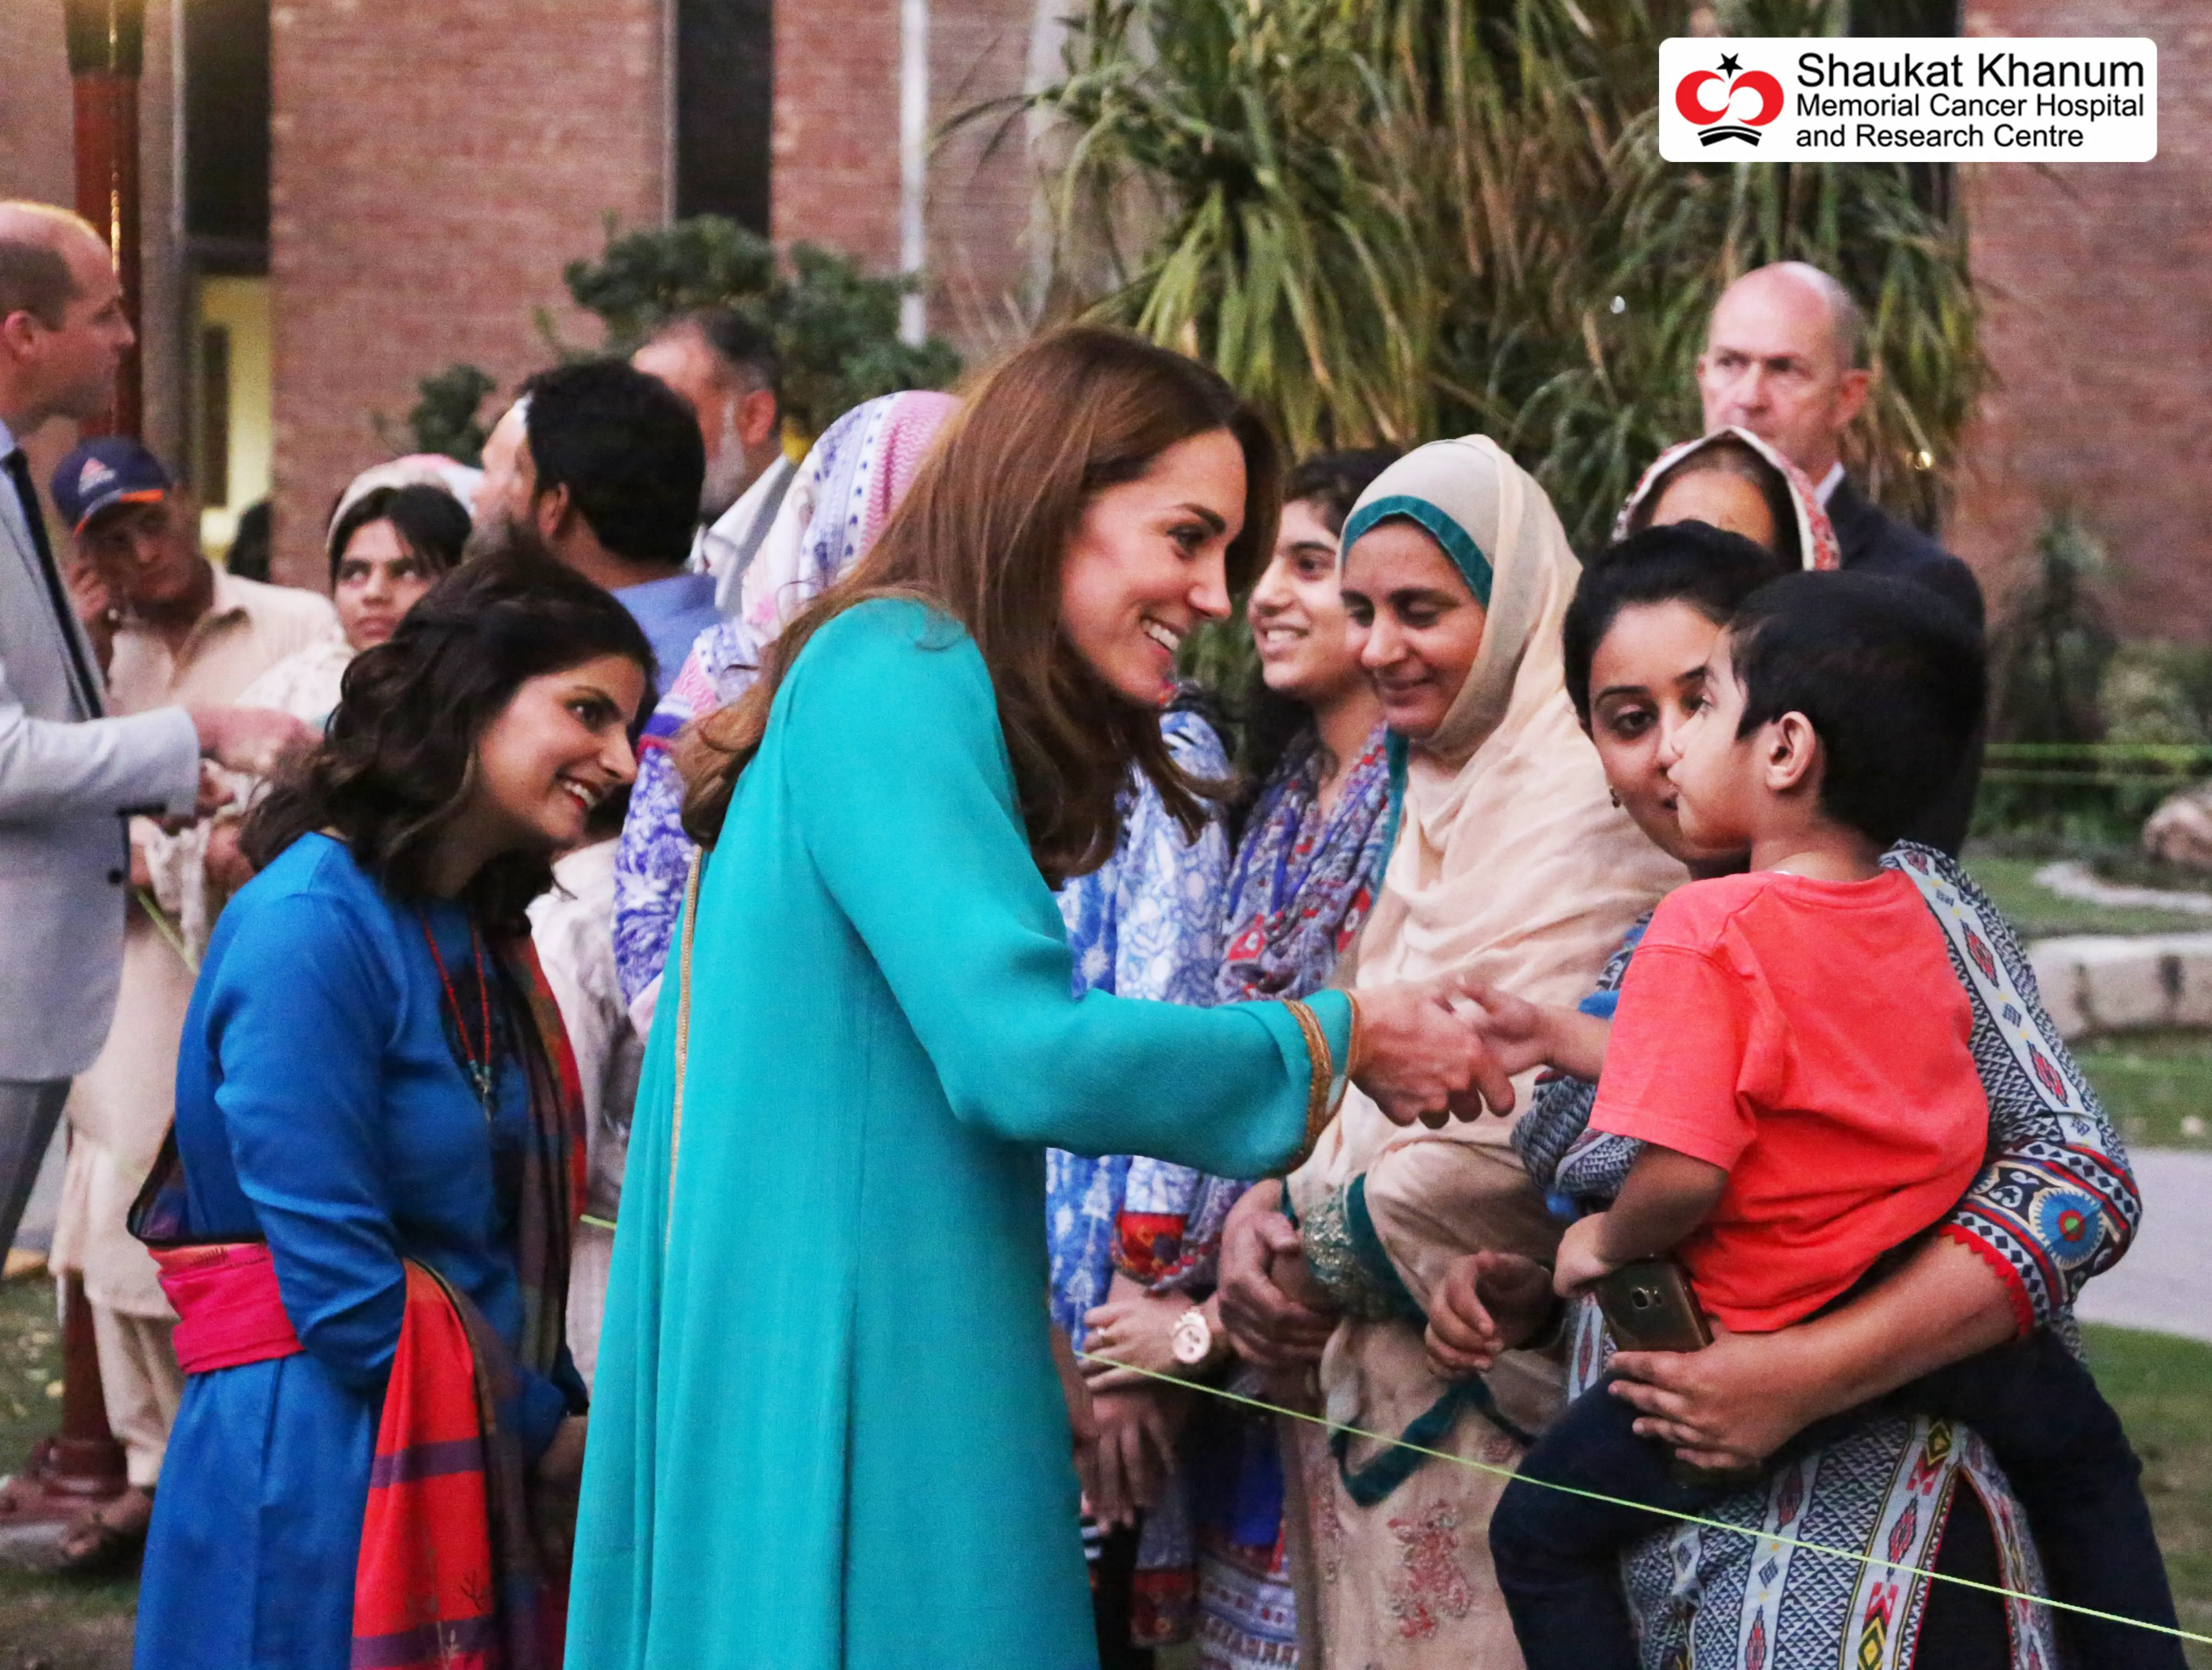 Duke and Duchess of Cambridge visited Shaukat Khanum Hospital in Lahore